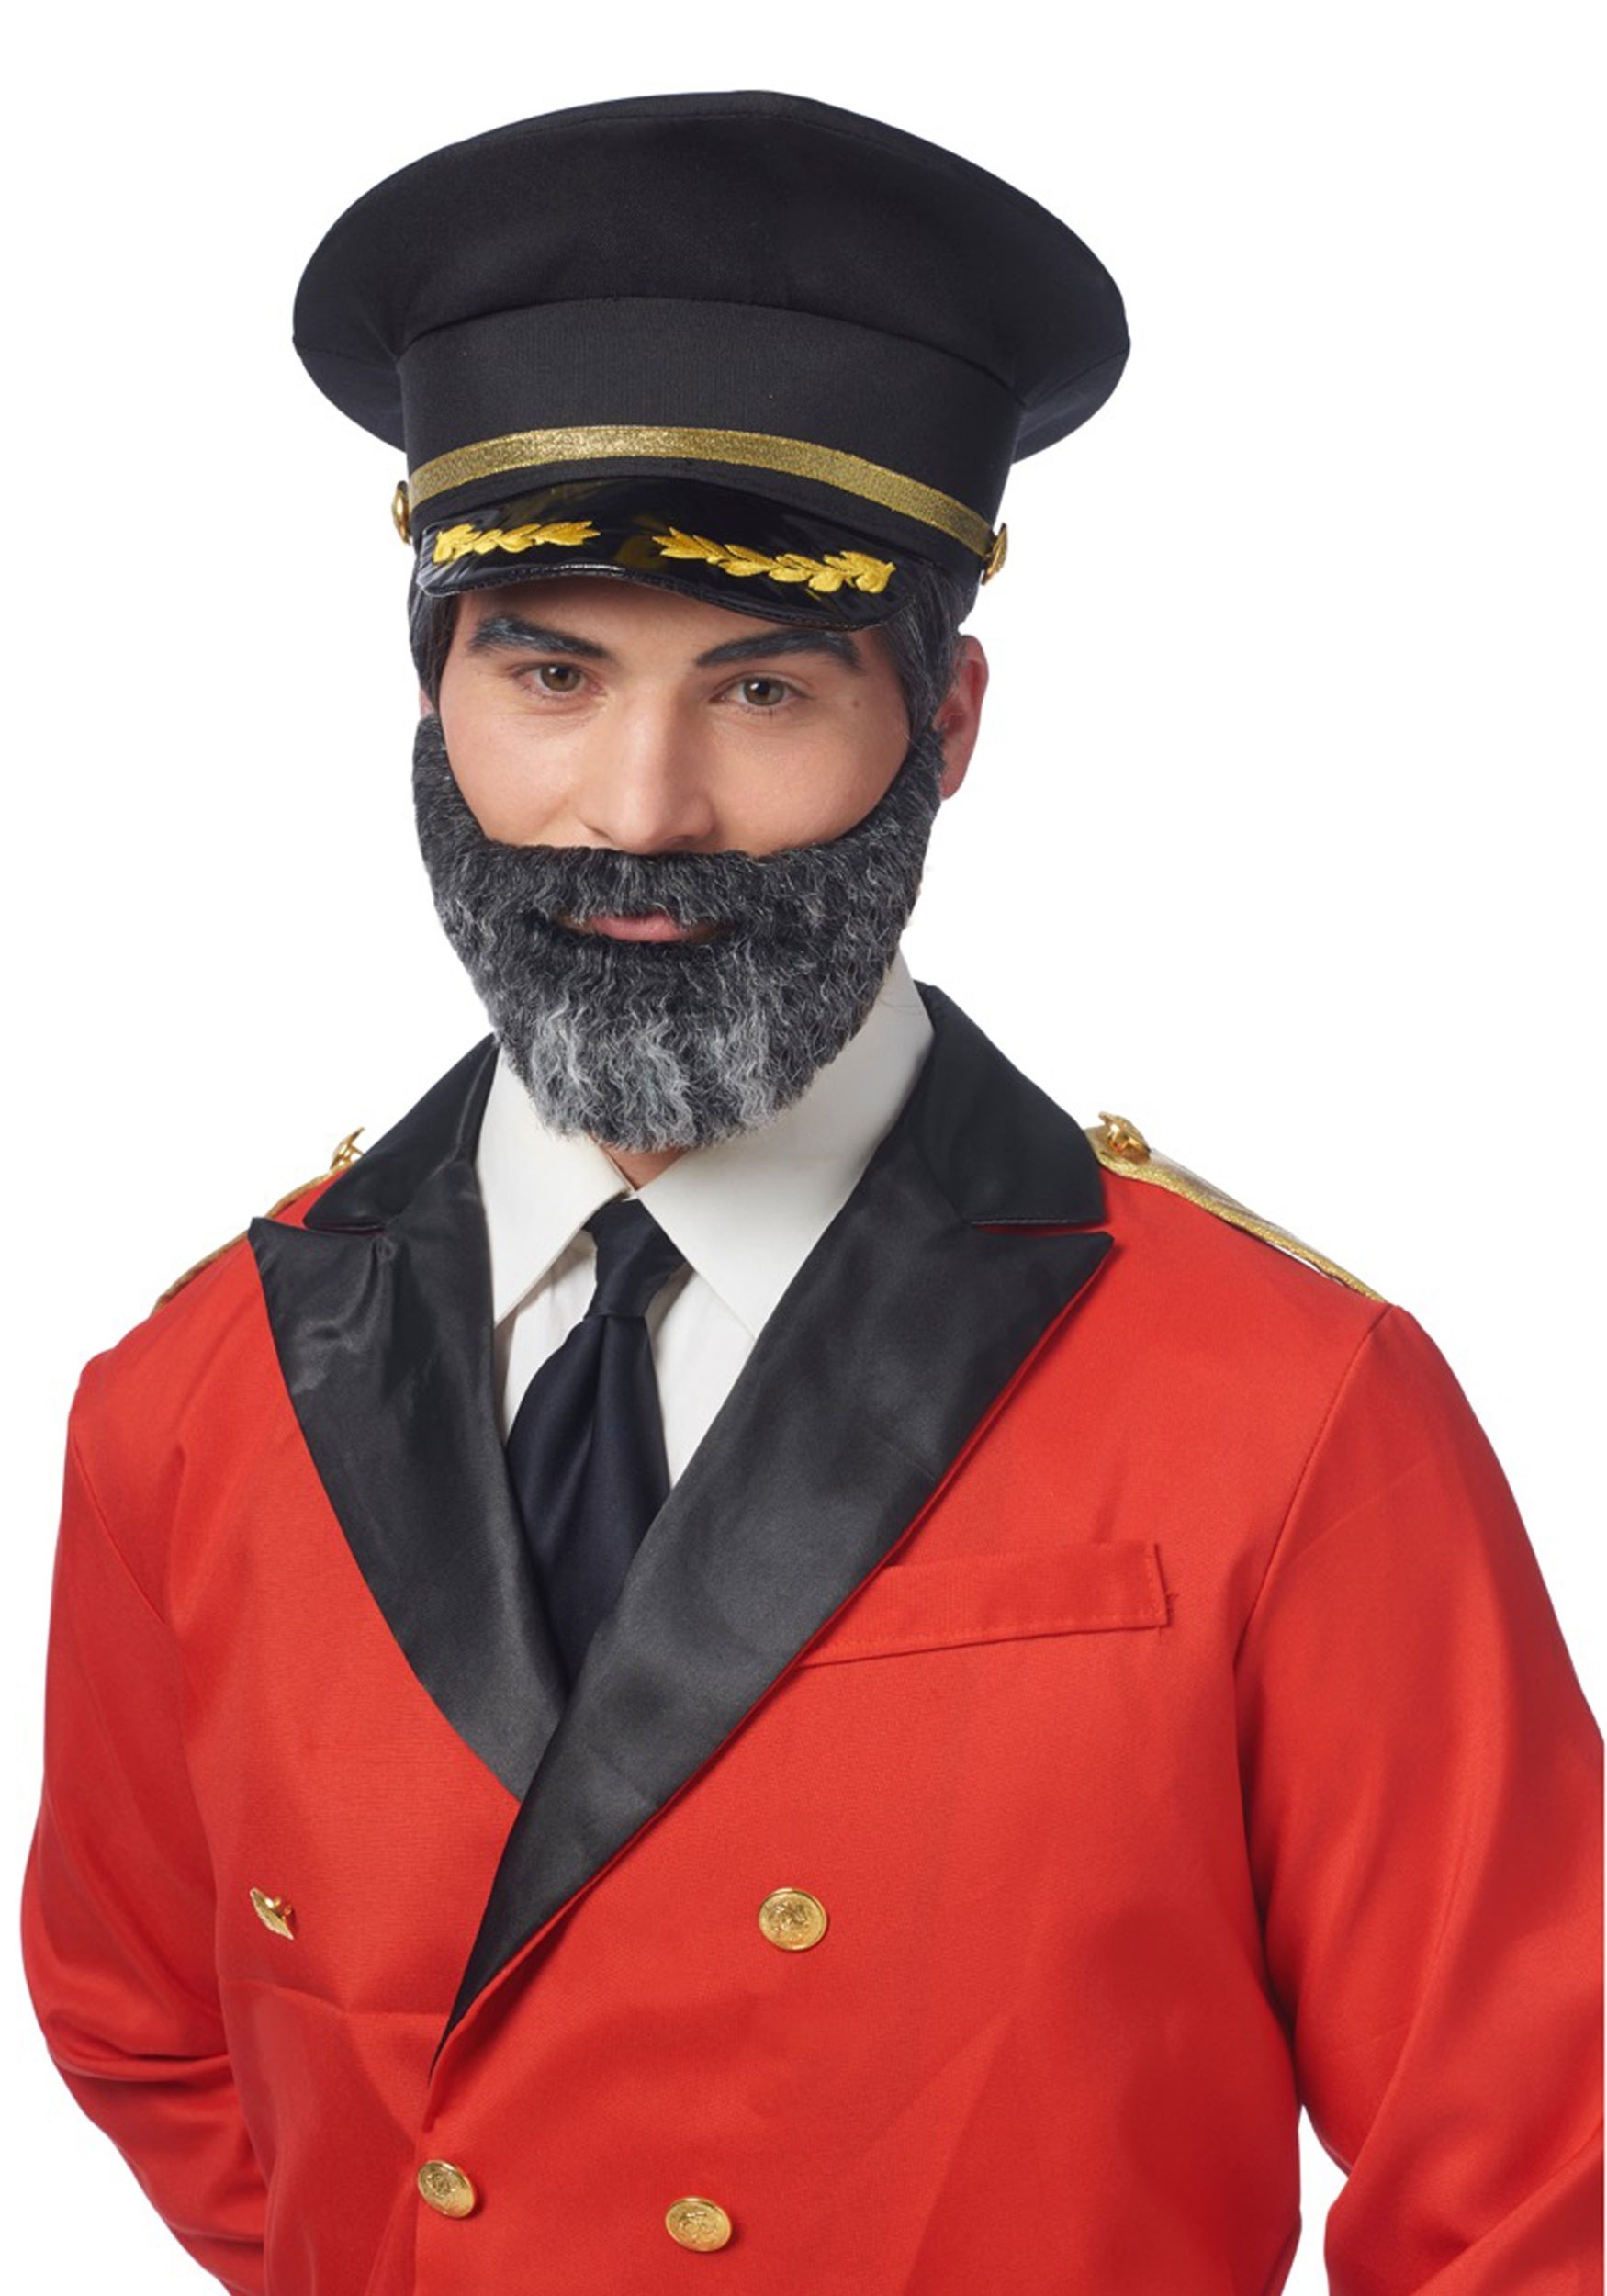 Mustache & Beard Captain Obvious